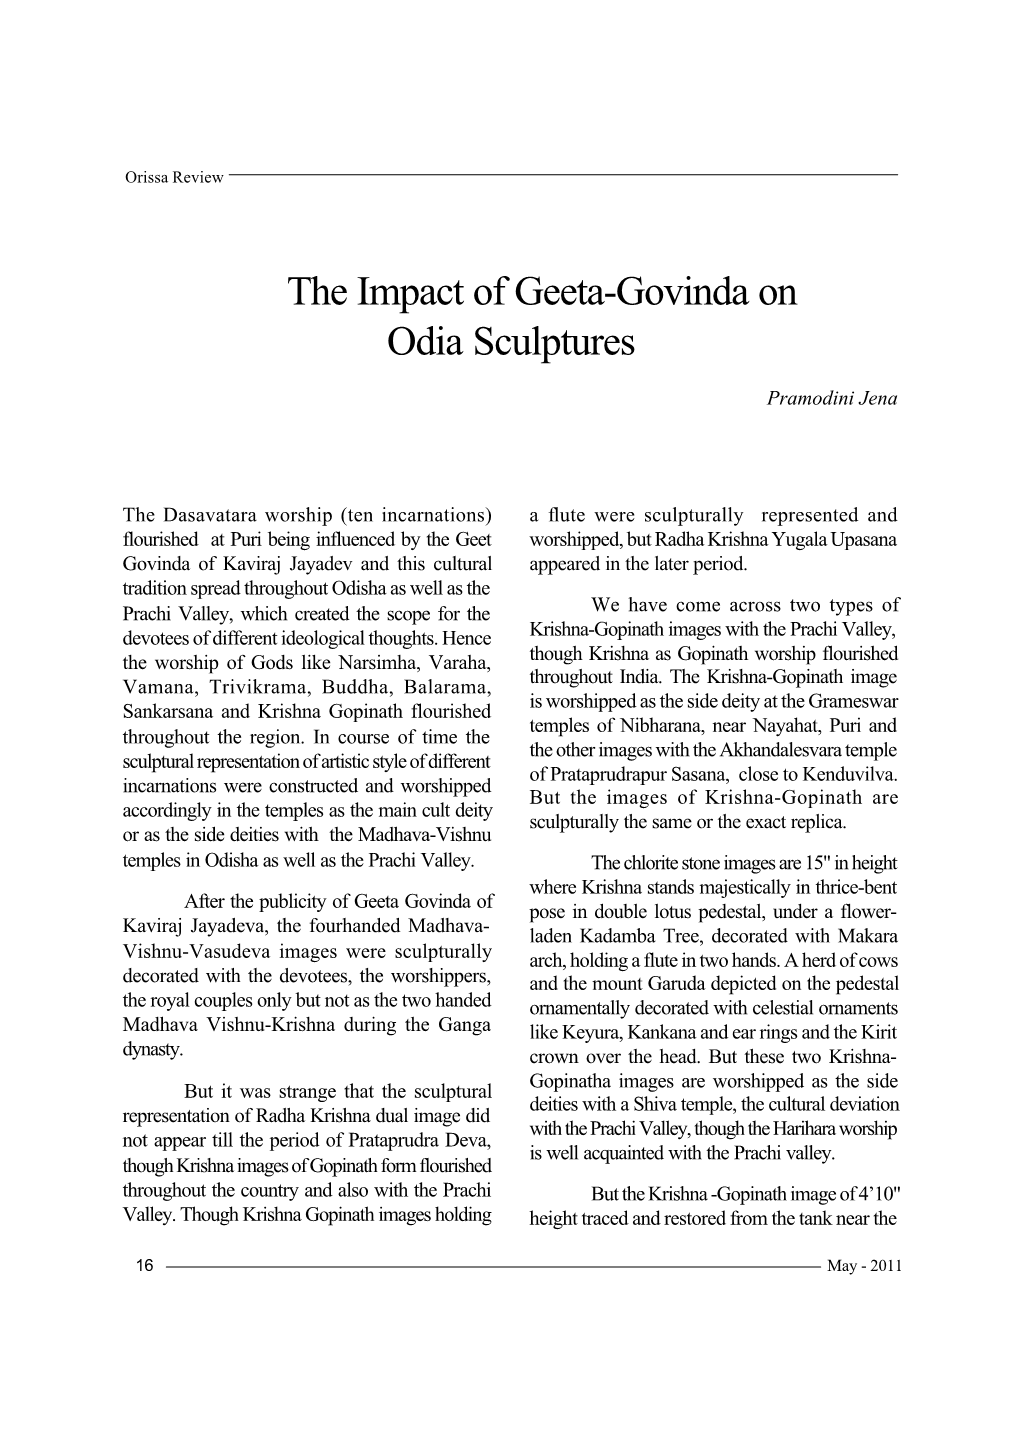 The Impact of Geeta-Govinda on Odia Sculptures